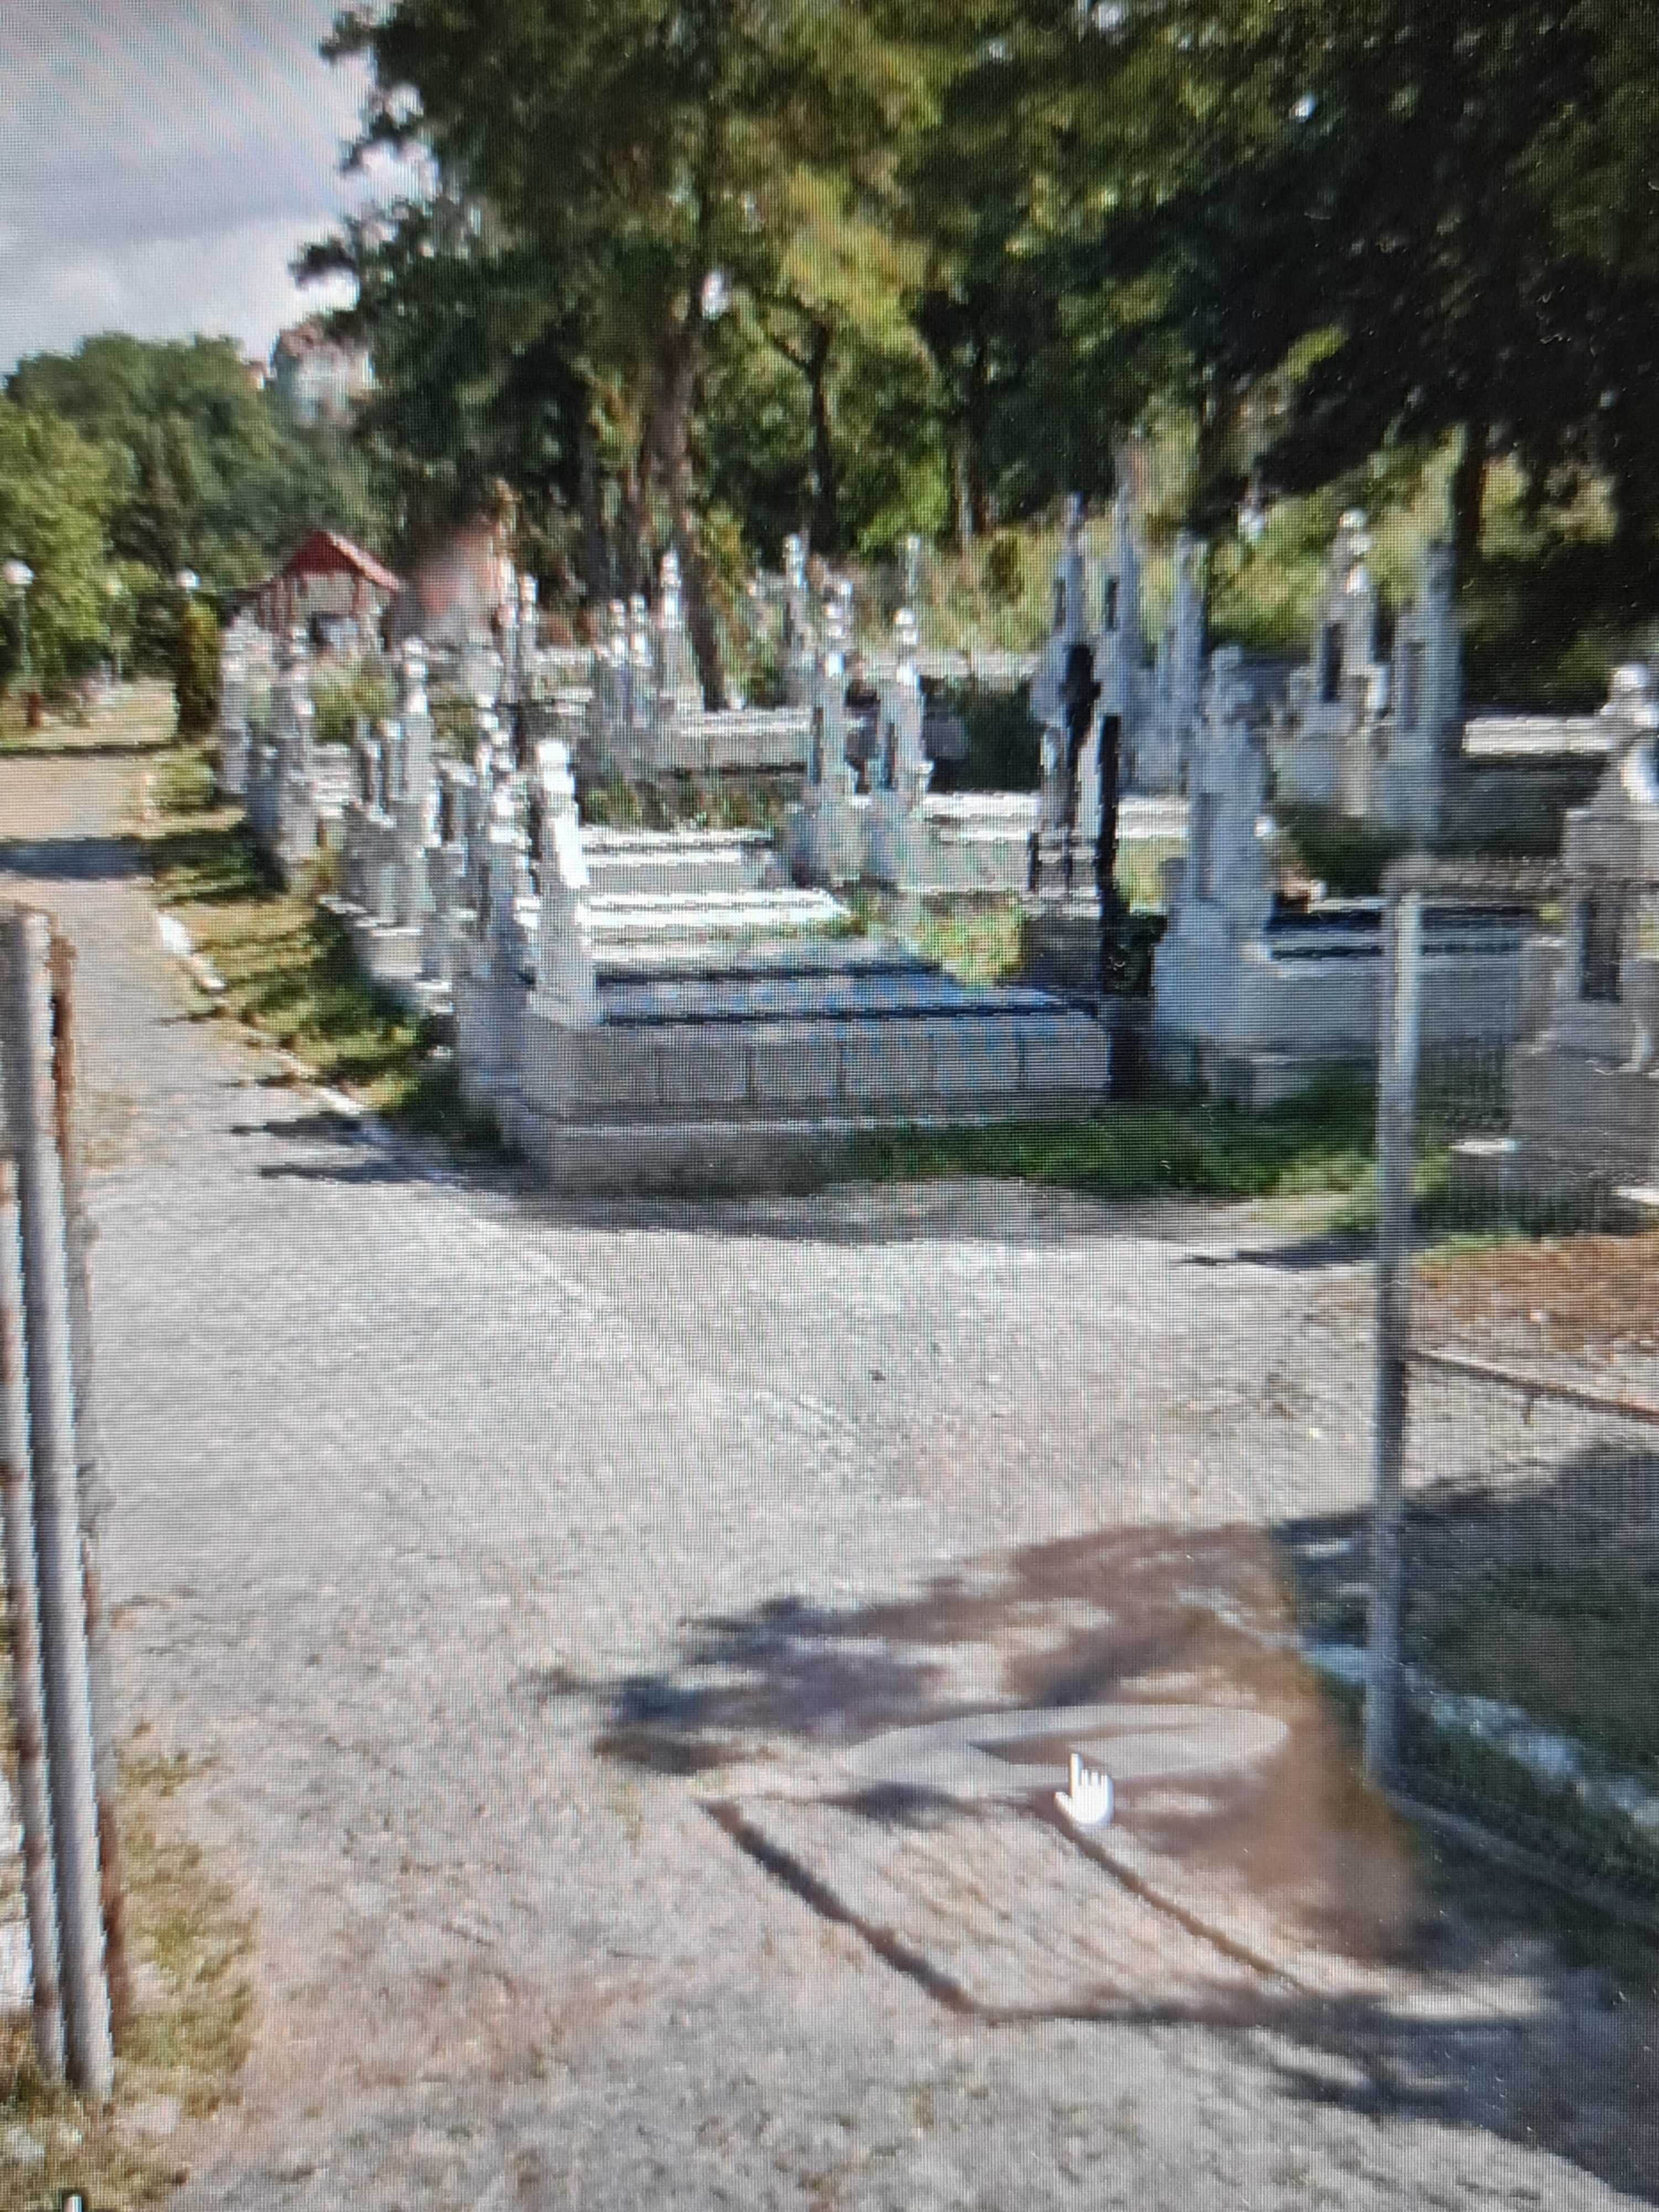 loc de veci in cimitirul/ortodox/ municipal Mures , platoul Cornesti